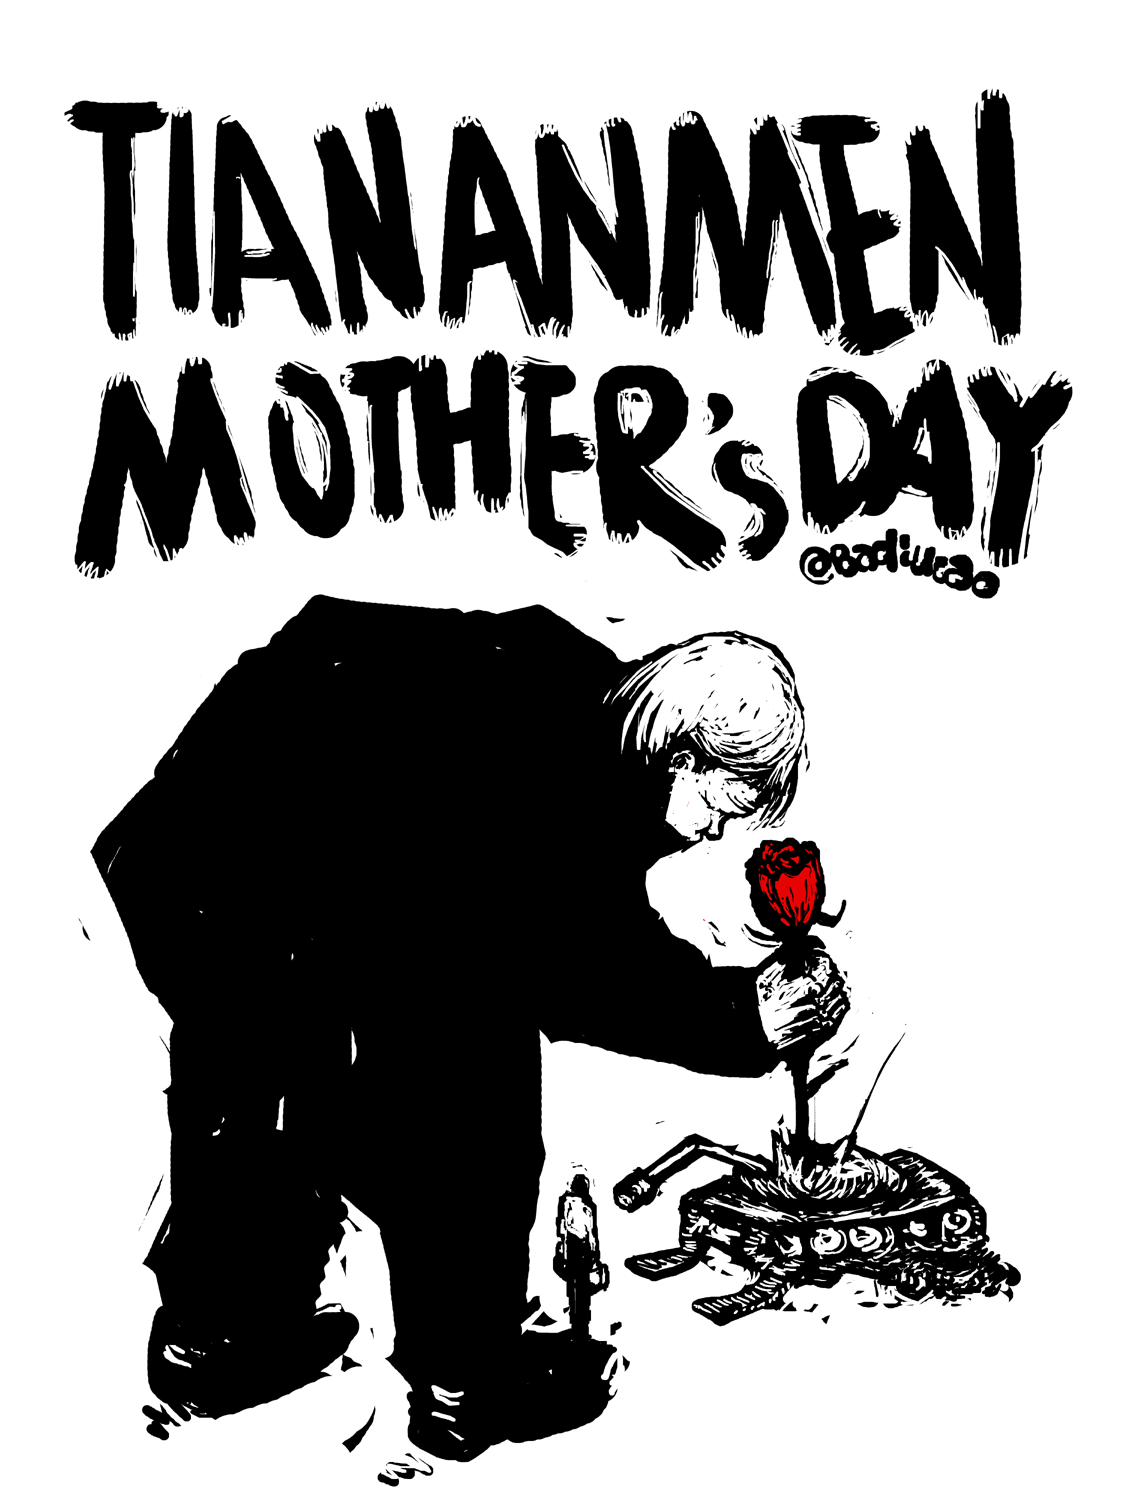 Badiucao (巴丢草): Tiananmen Mother’s Day